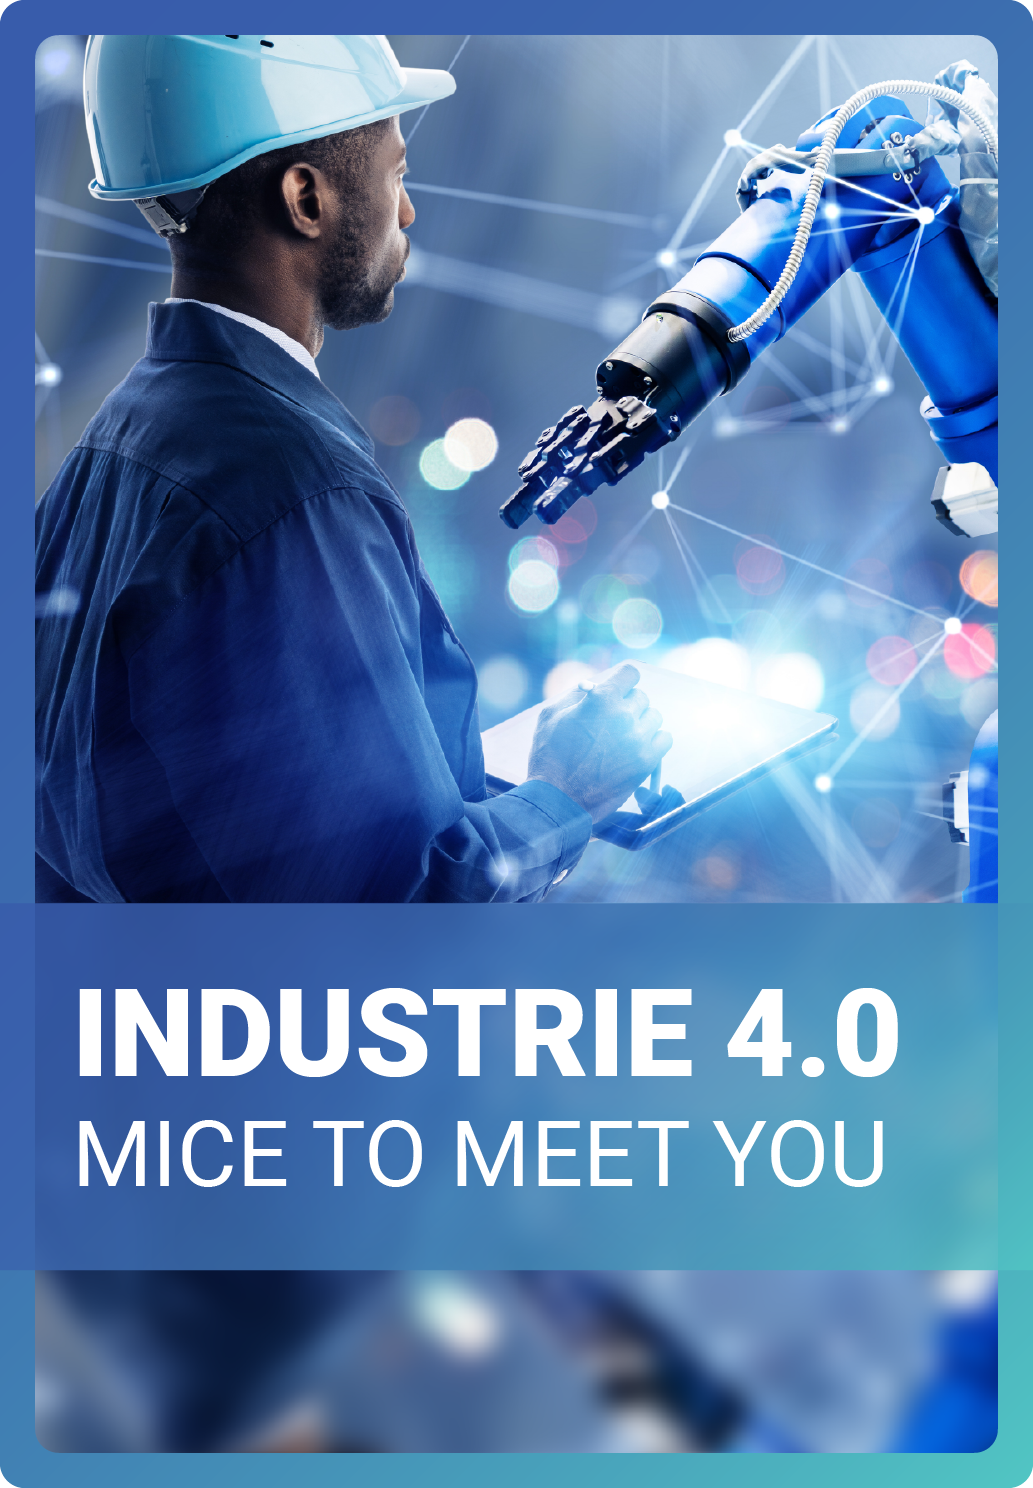 Industrie 4.0 - MICE